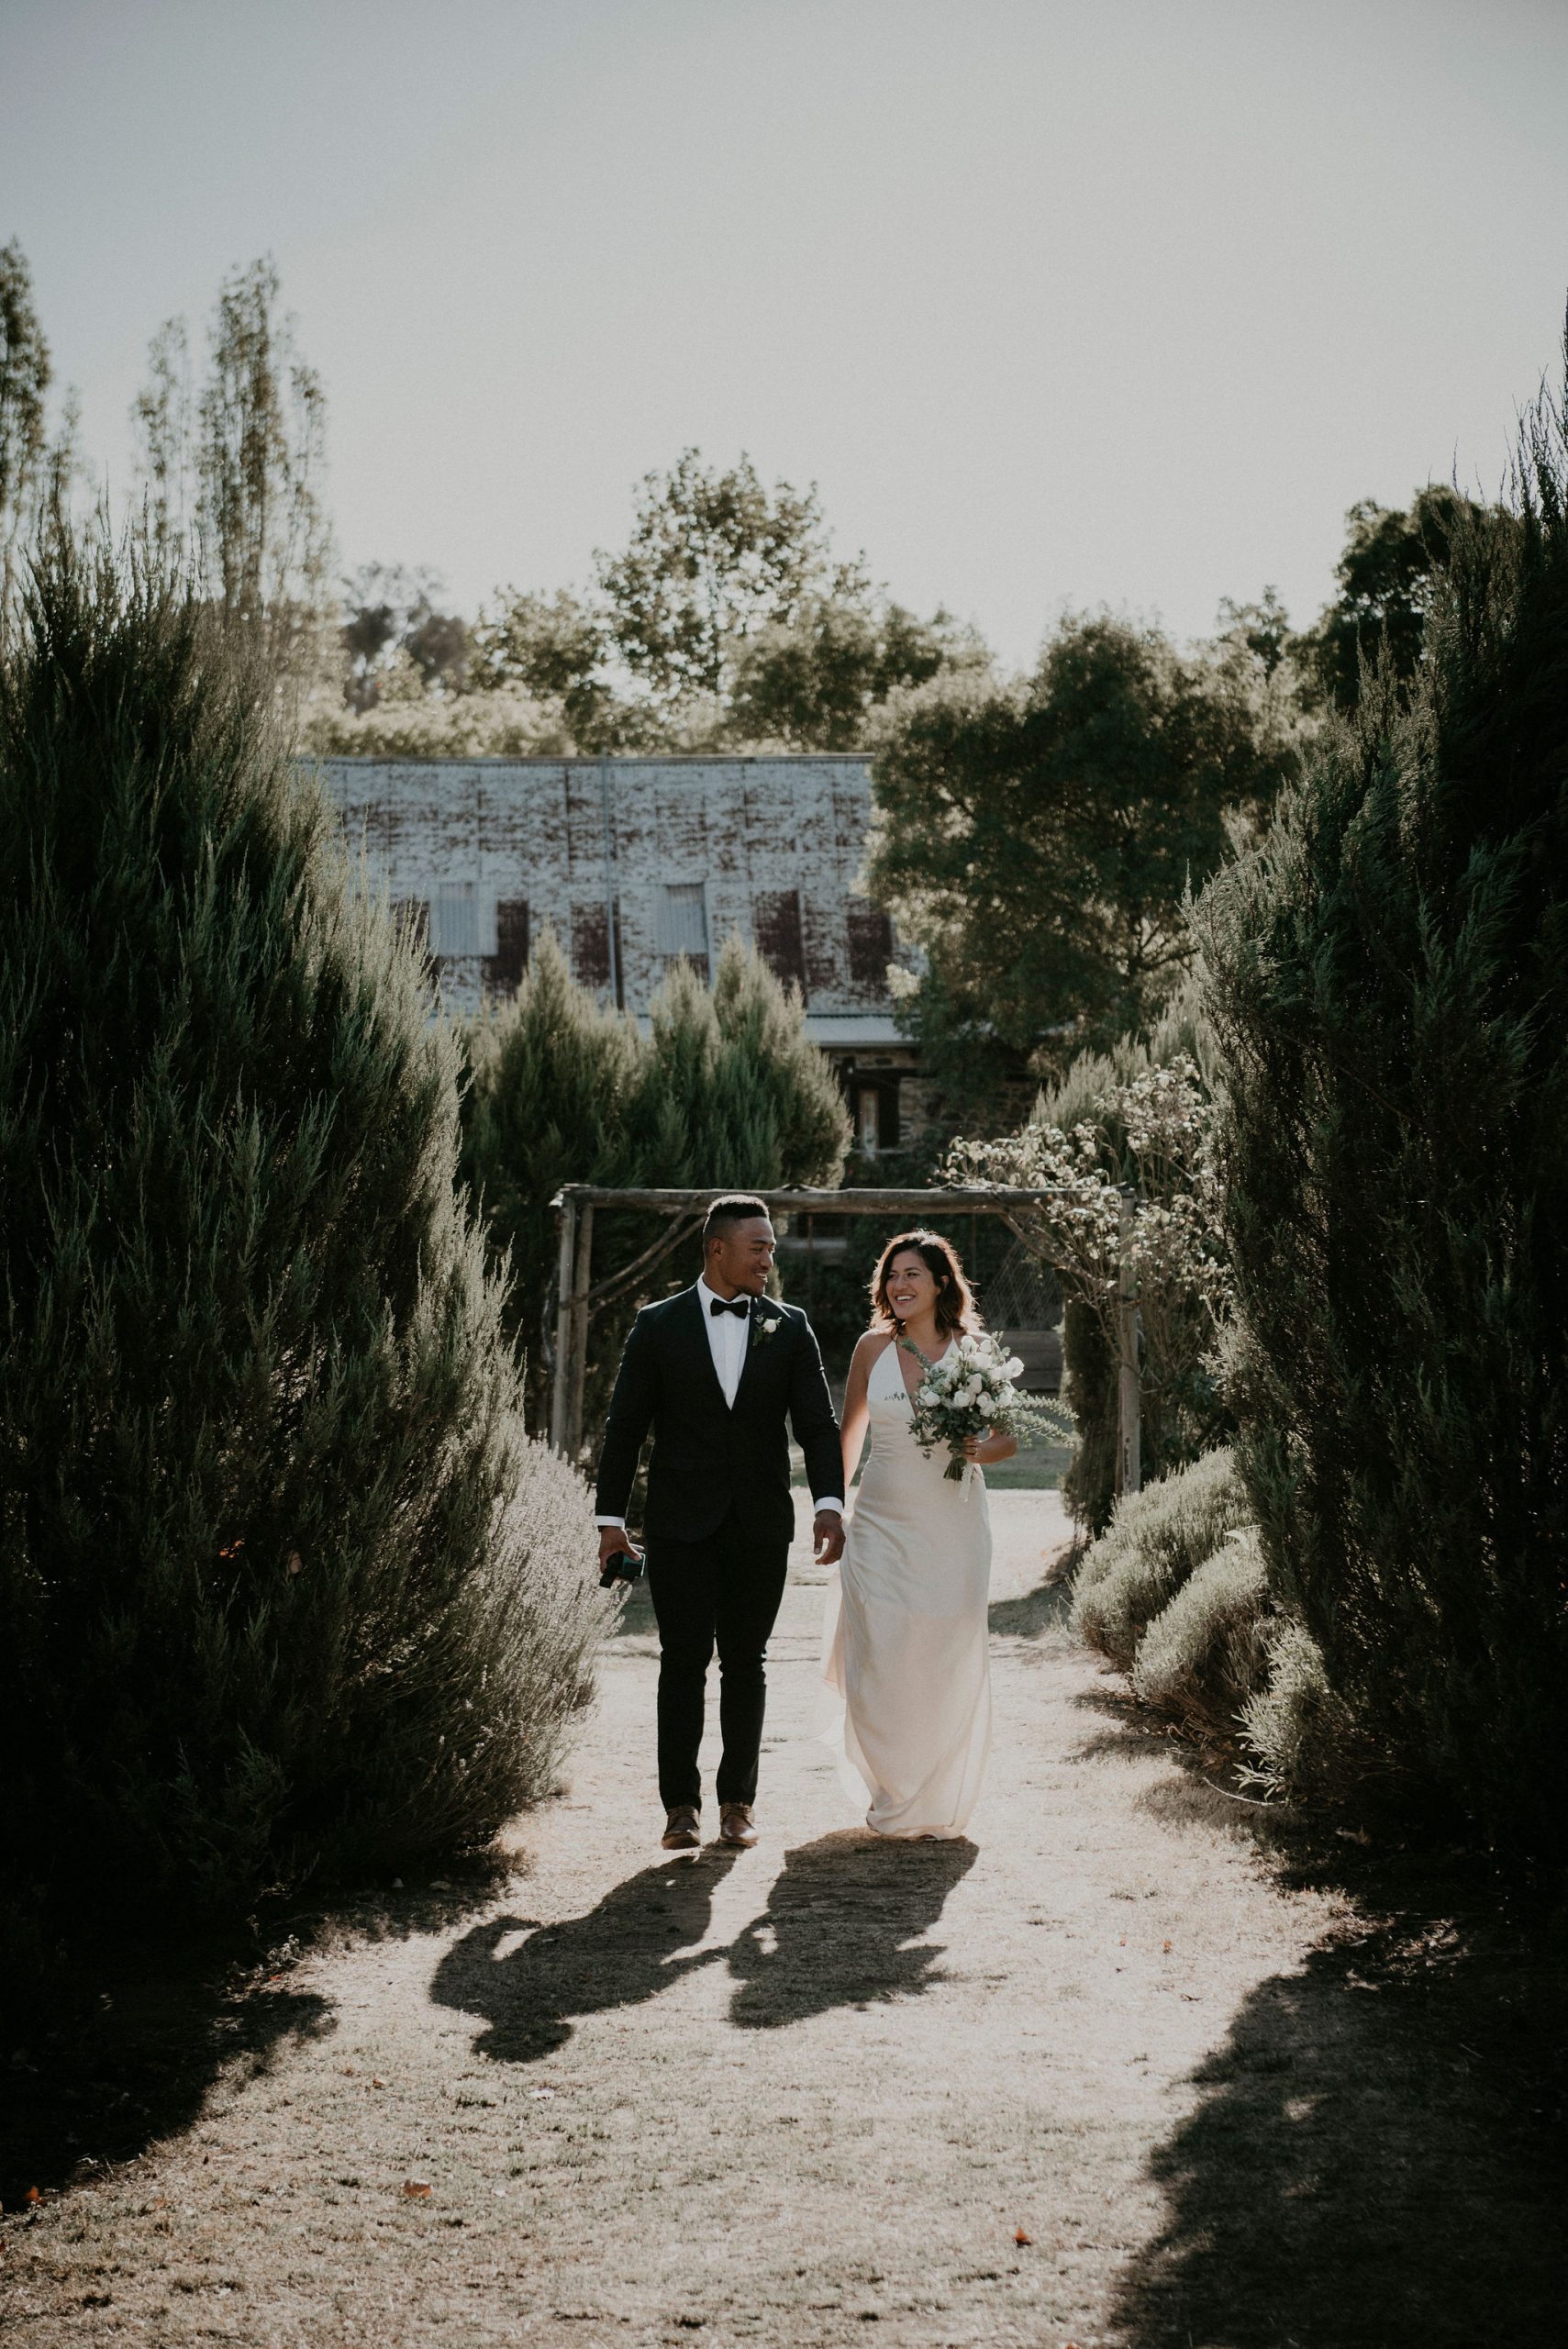 Lets-Elope-Melbourne-Celebrant-Photographer-Elopement-Package-Victoria-Sarah-Matler-Photography-Lavandula-Swiss-Italian-Farm-Daylesford-Macedon-Ranges-weddings-intimate-8